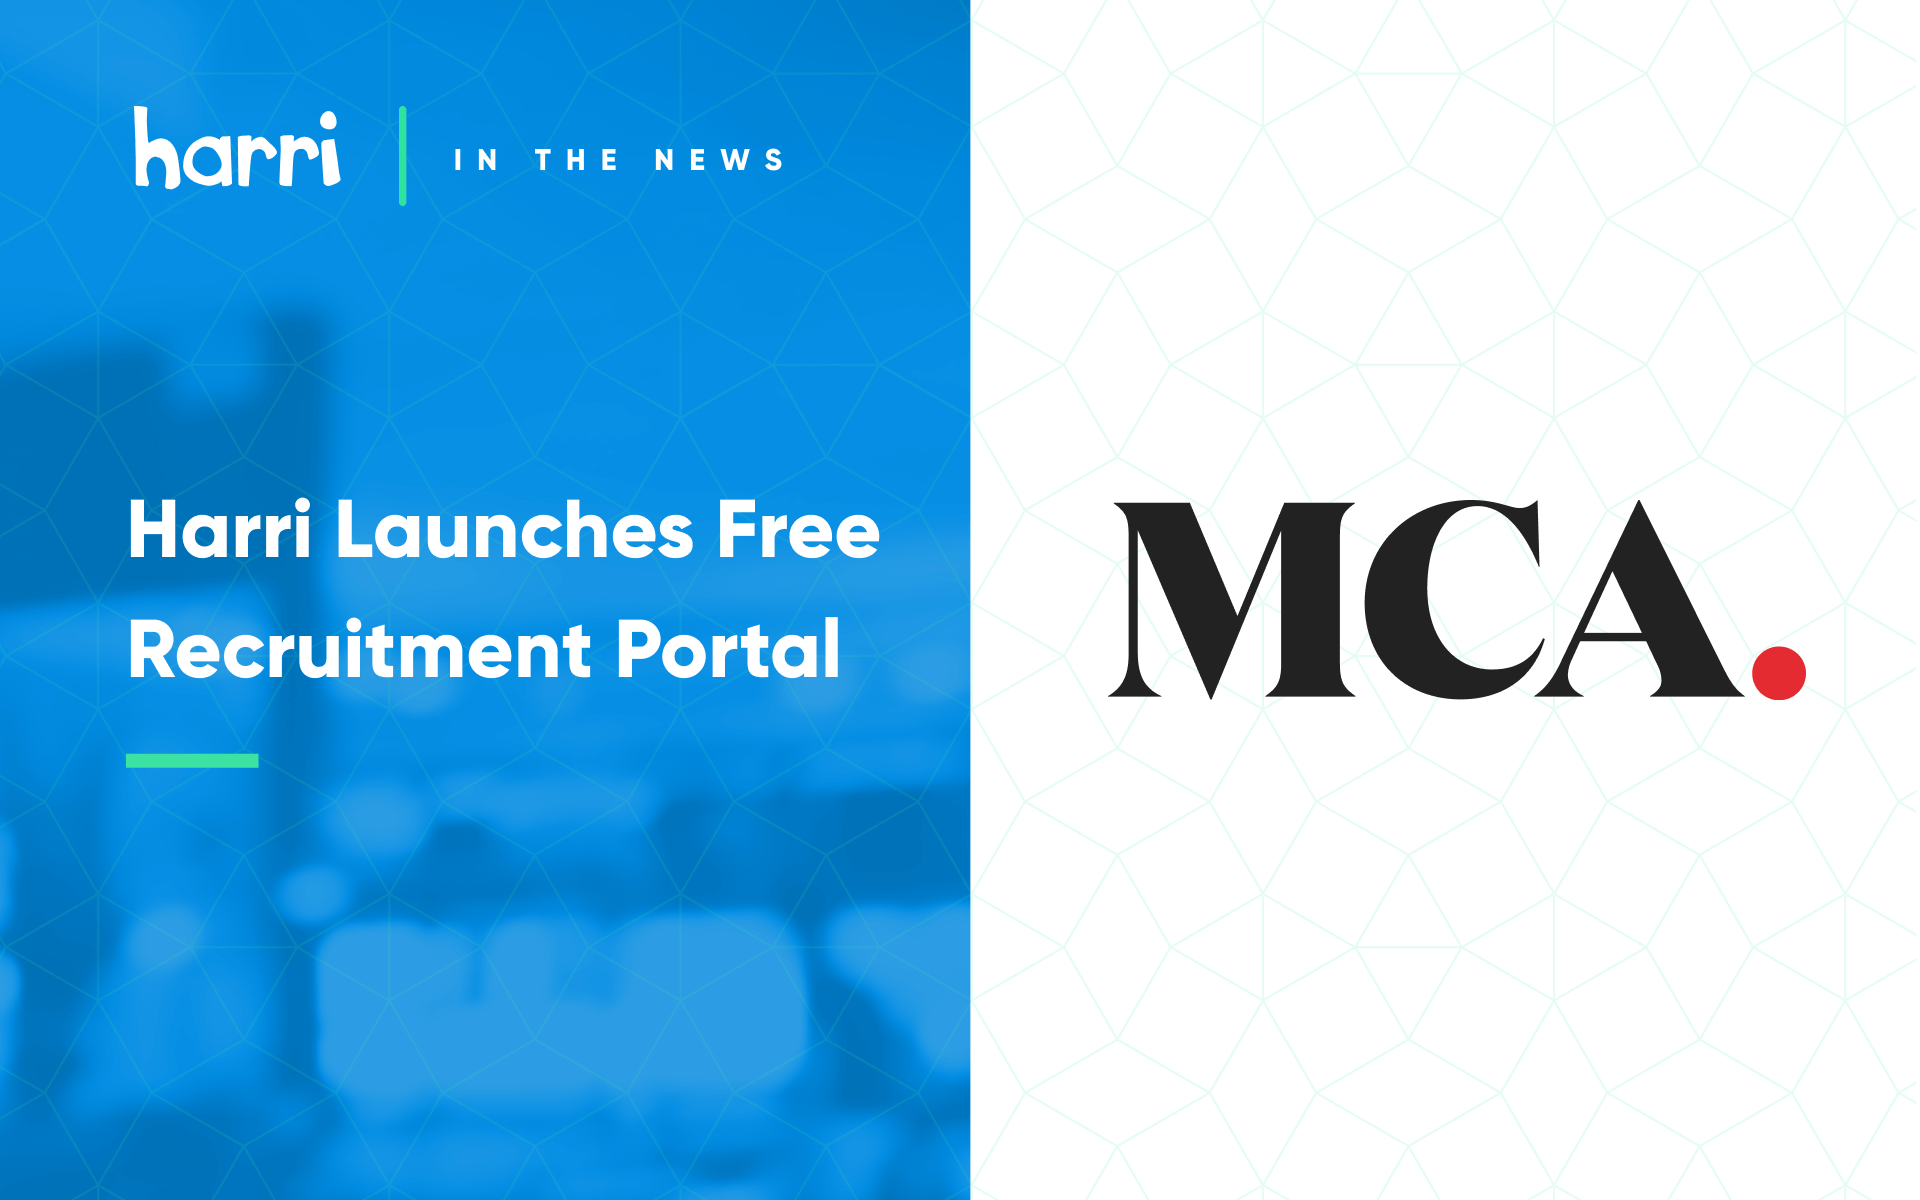 Harri free recruitment portal MCA